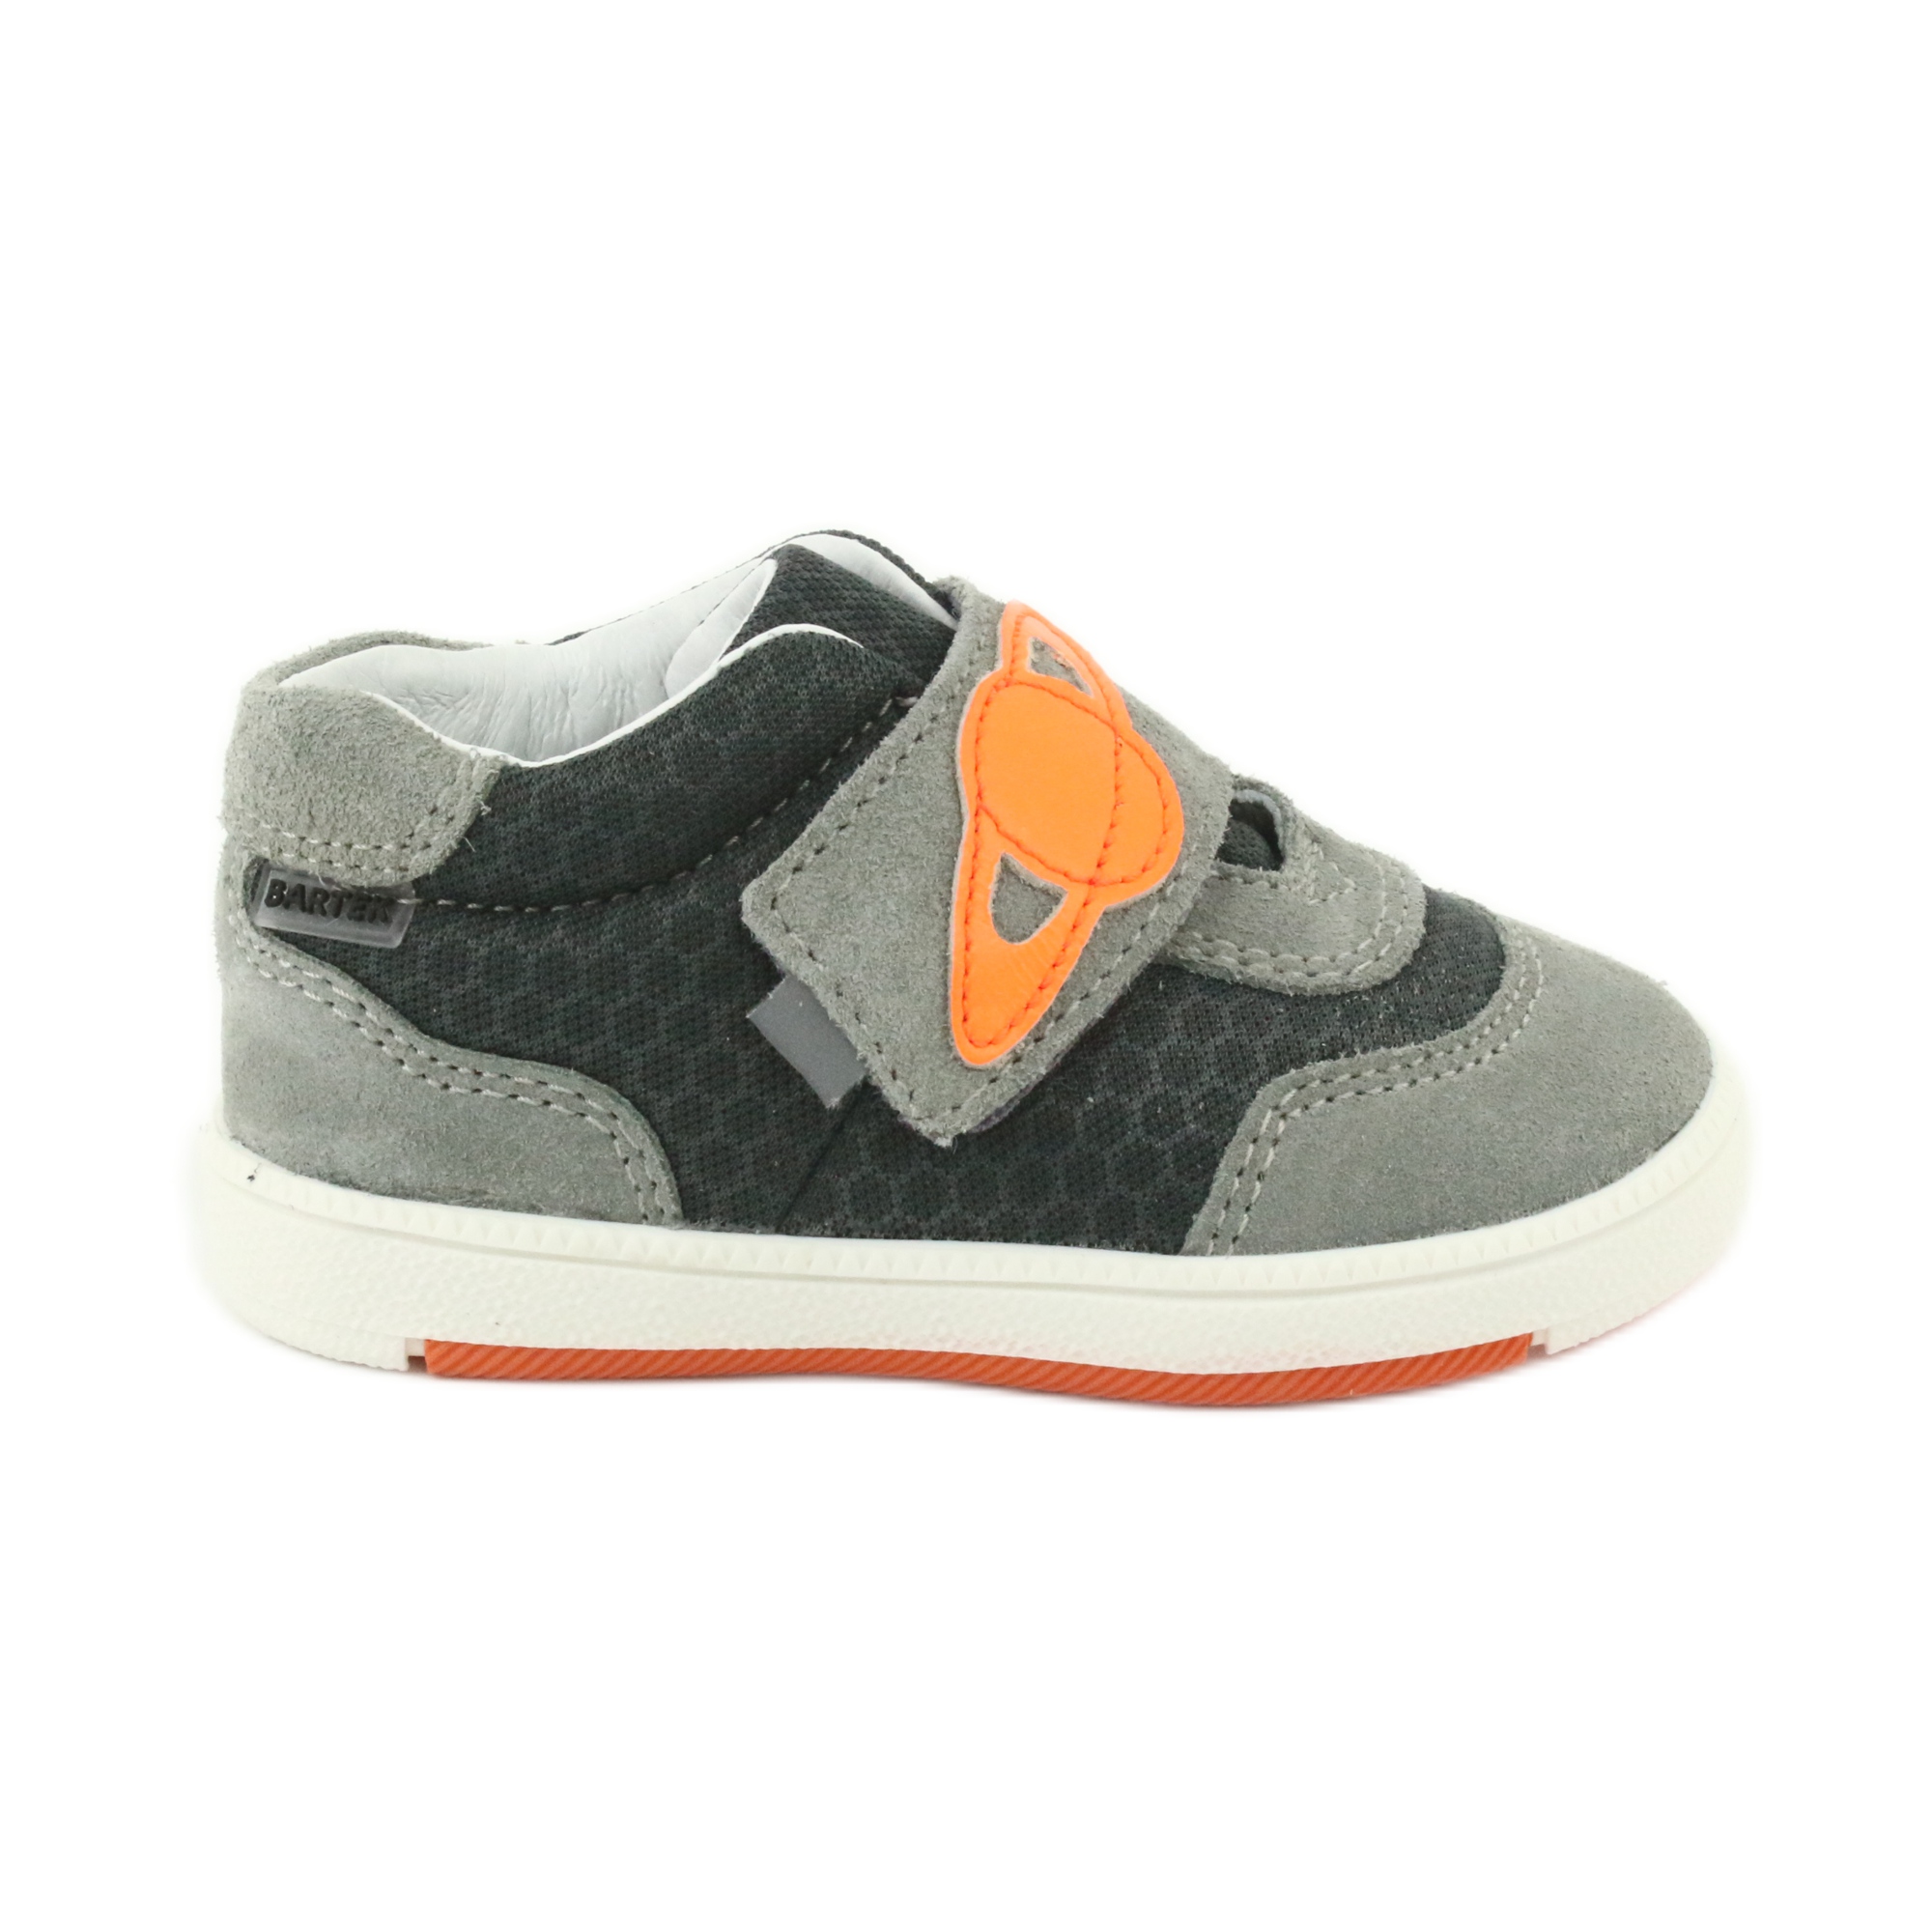 orange and grey sneakers